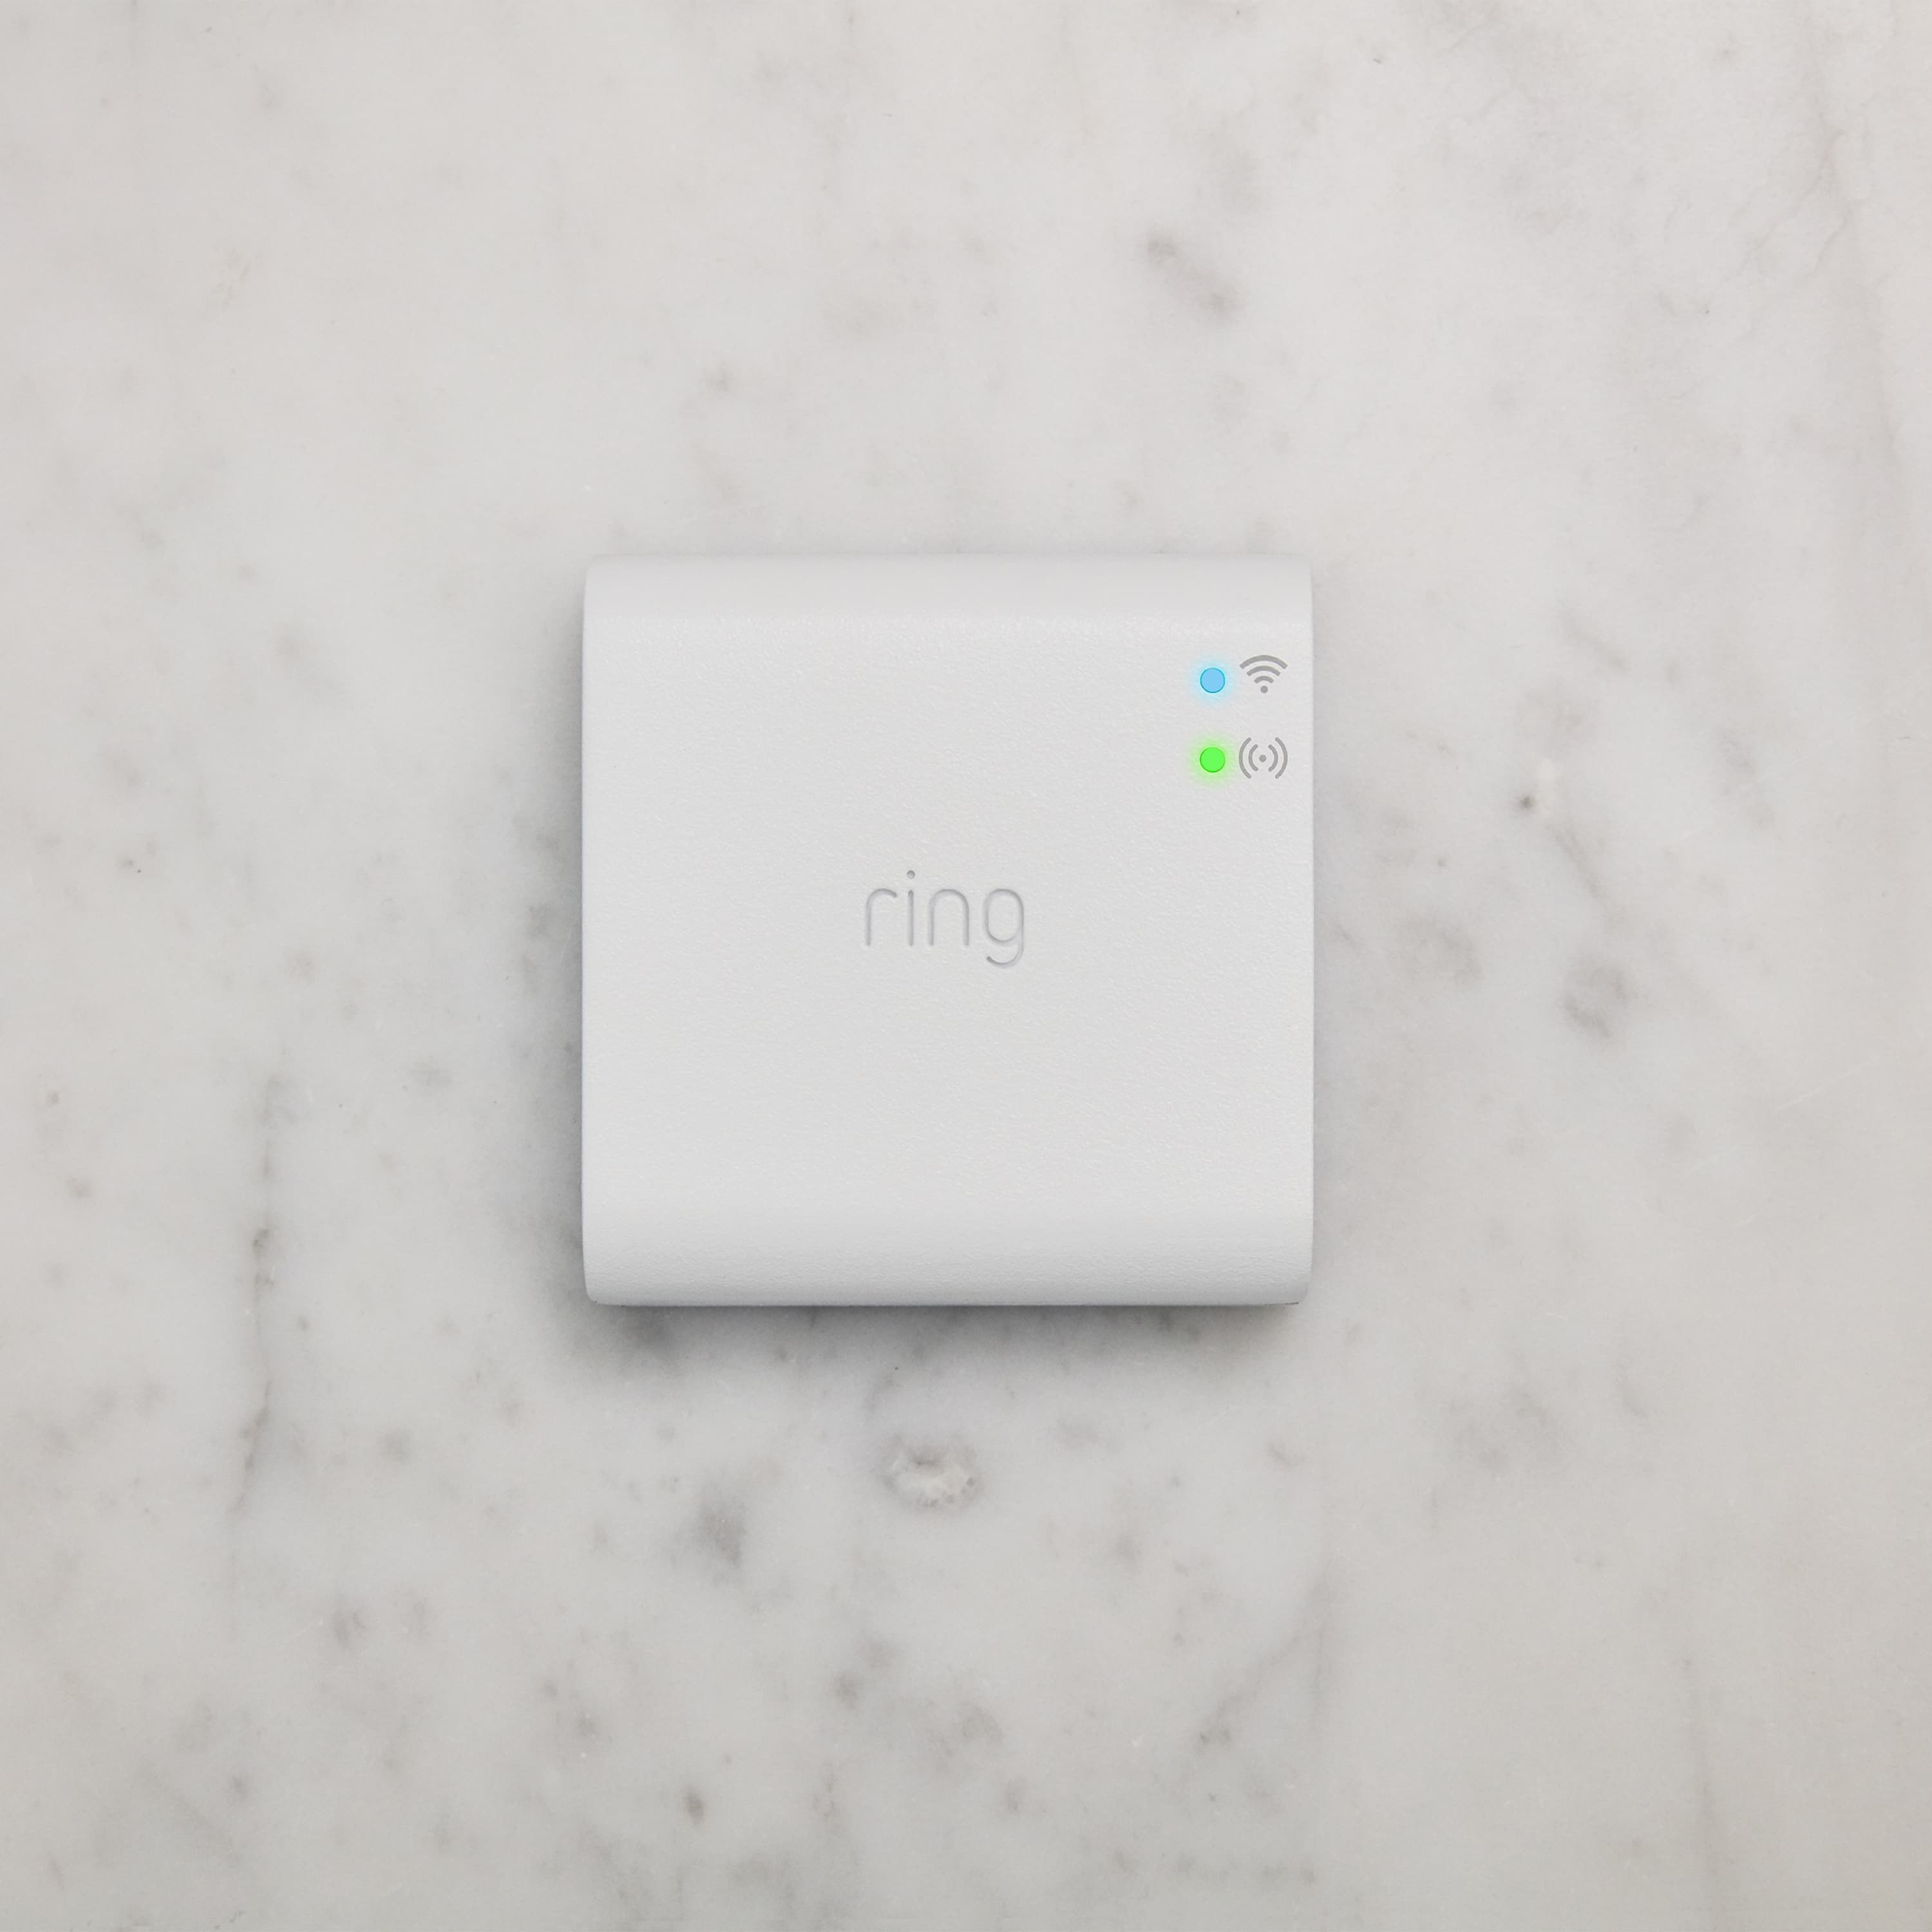 Ring Bridge lost connection - Smart Lighting - Ring Community